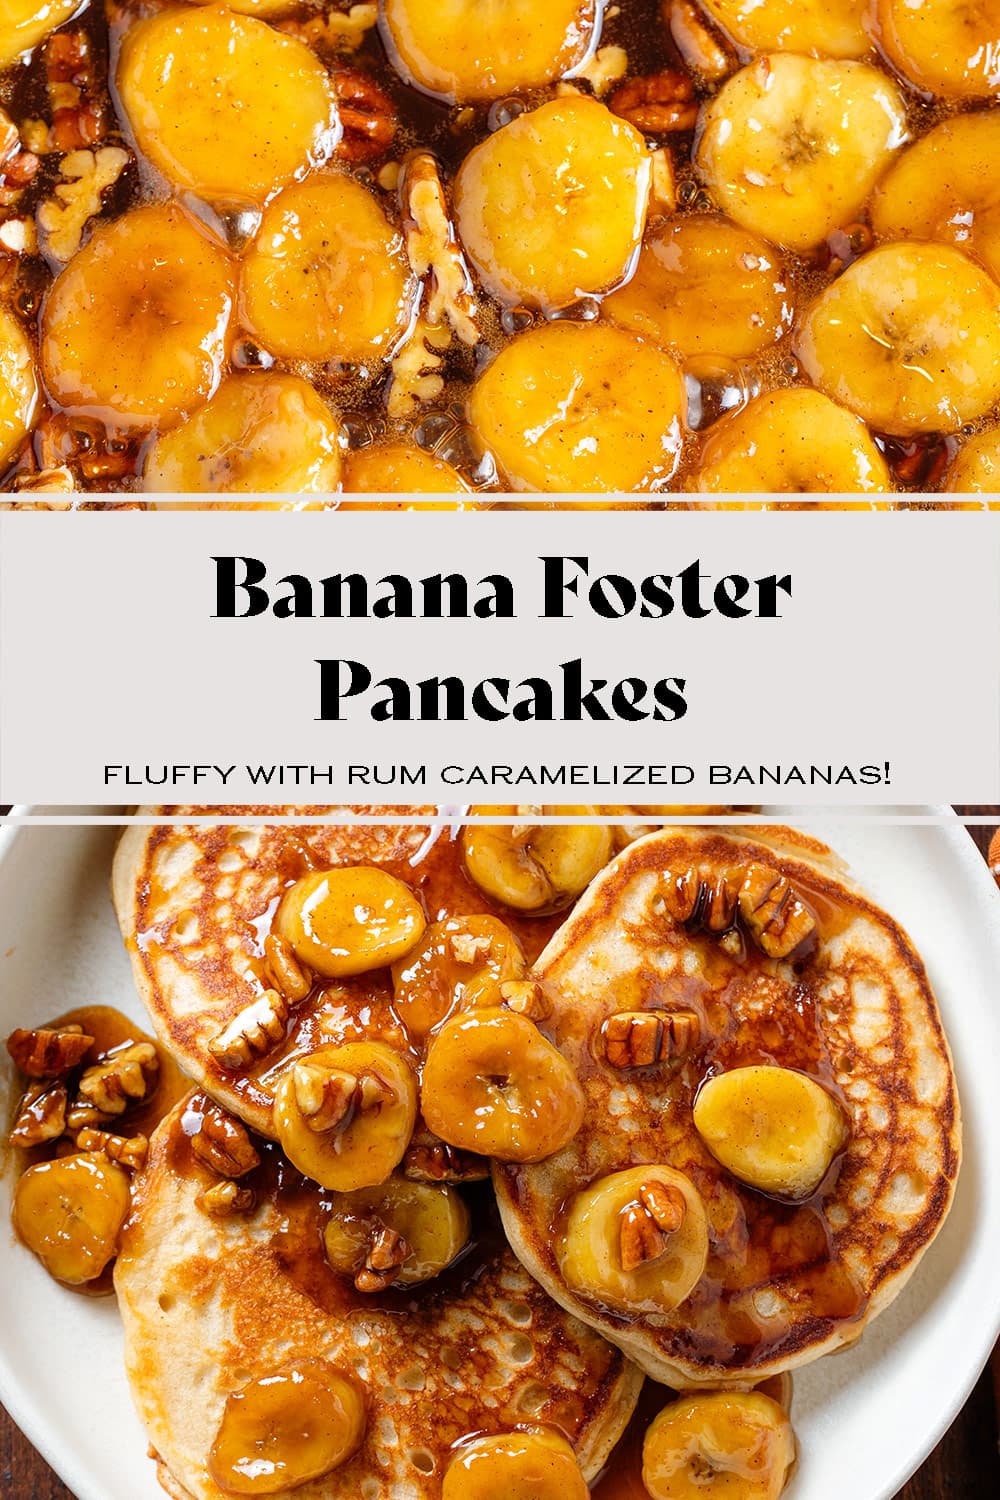 Banana Foster Pancakes